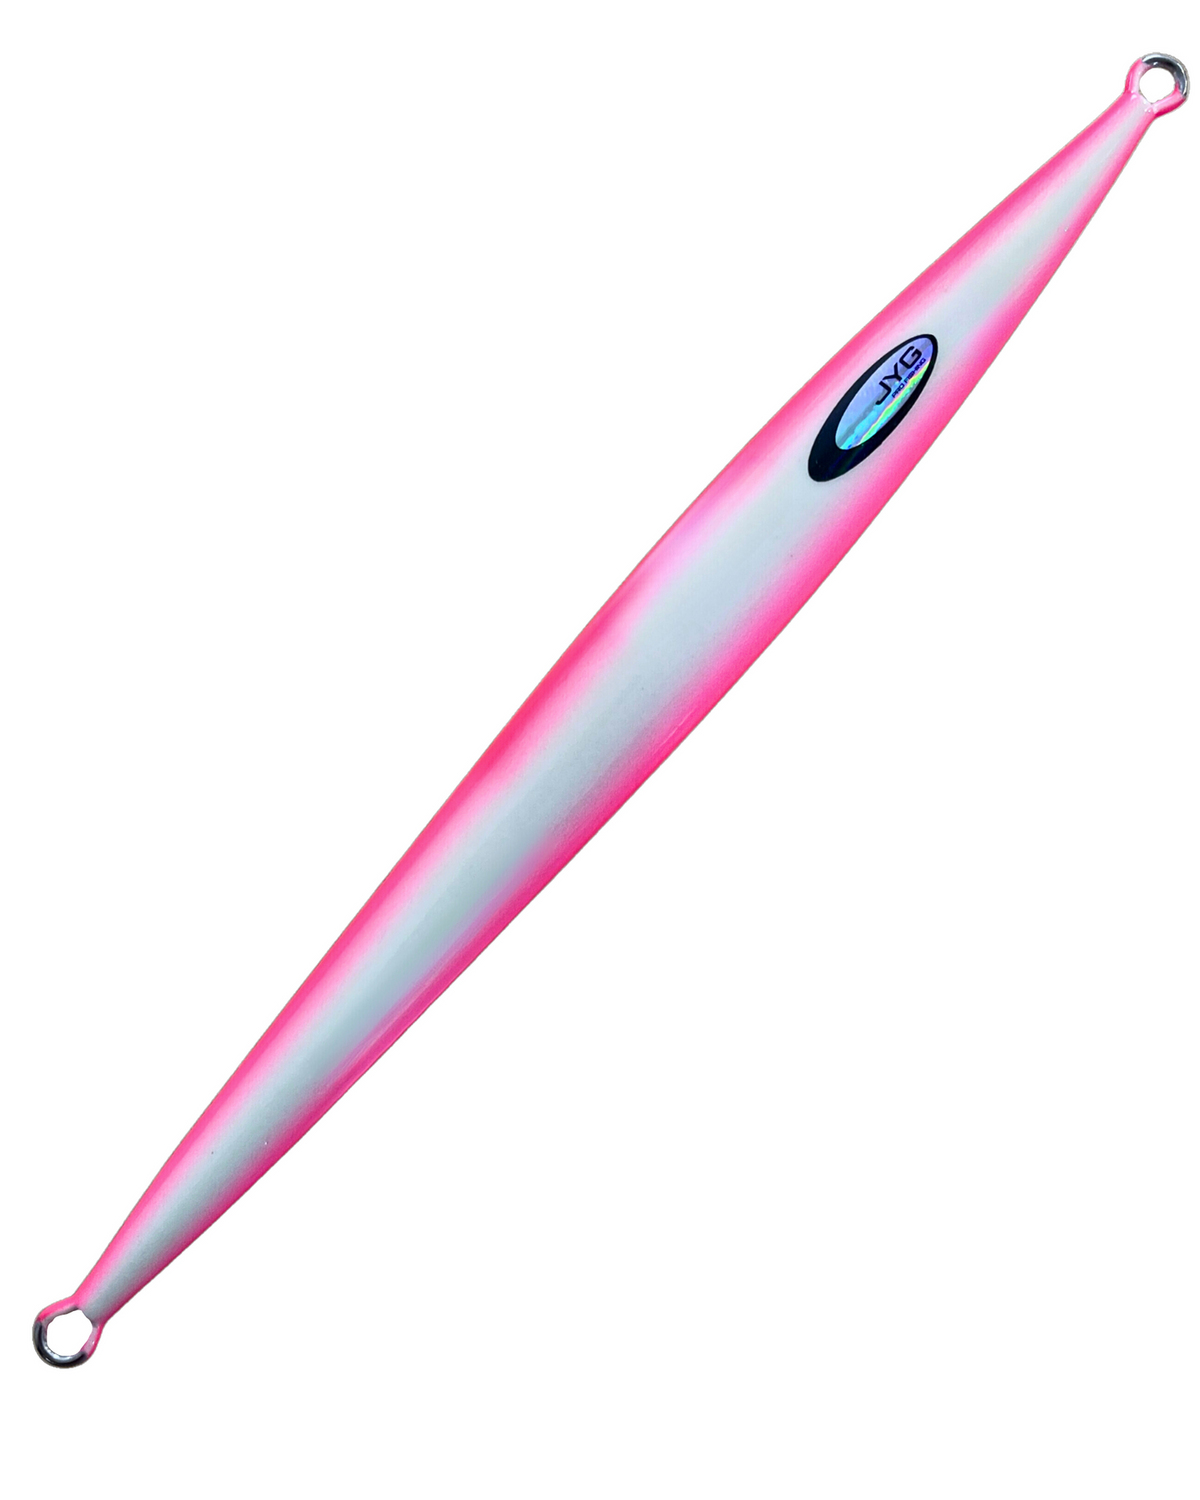 Jyg Pro STRYKE Pink Glow (Limited Edition)